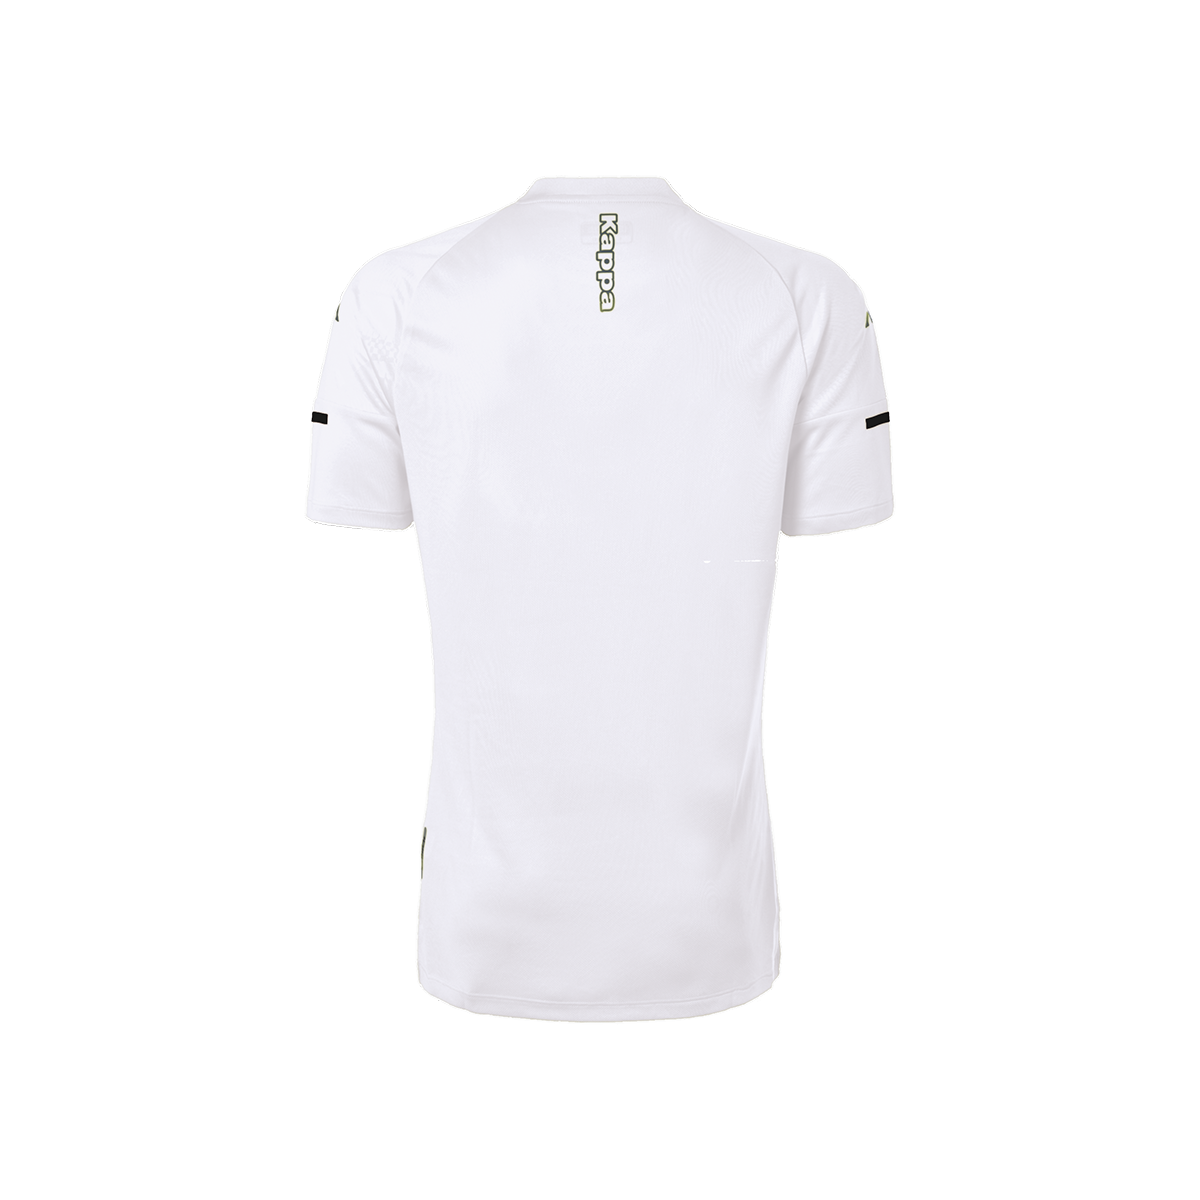 Camiseta Abou Pro 6 Blanco Hombre - Imagen 2